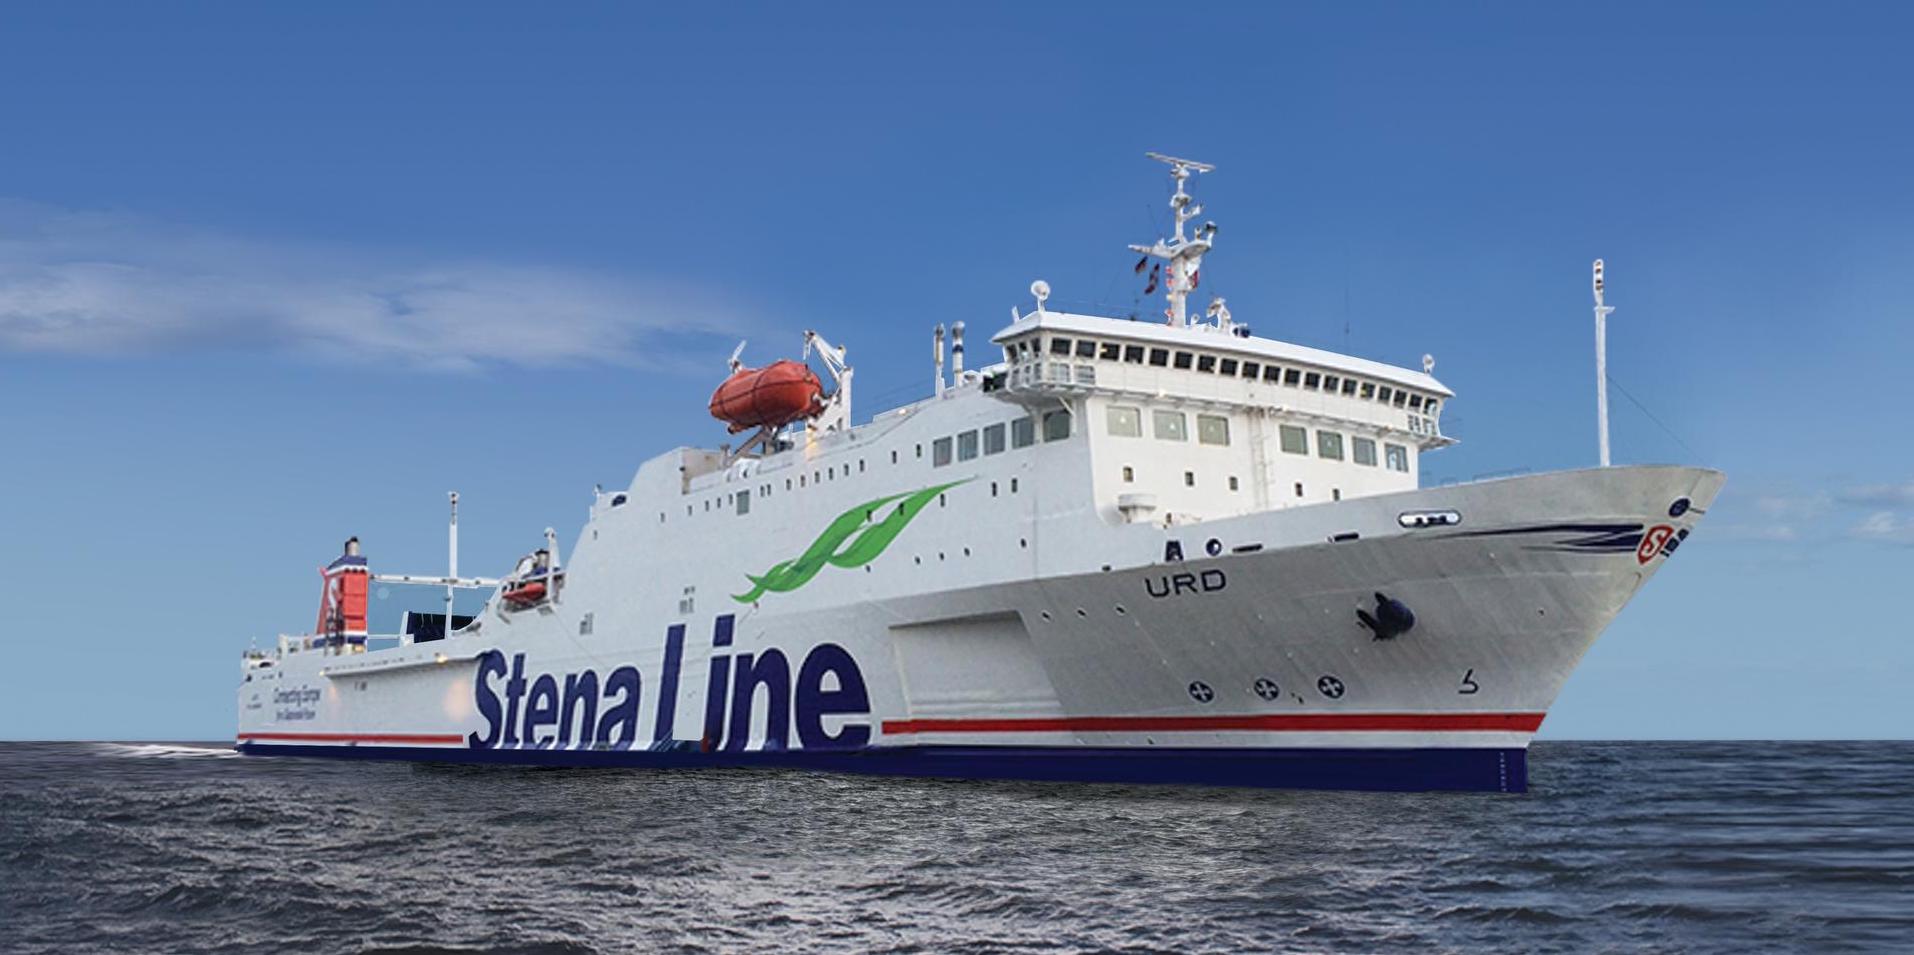 Photo of Stena Line - Urd ship